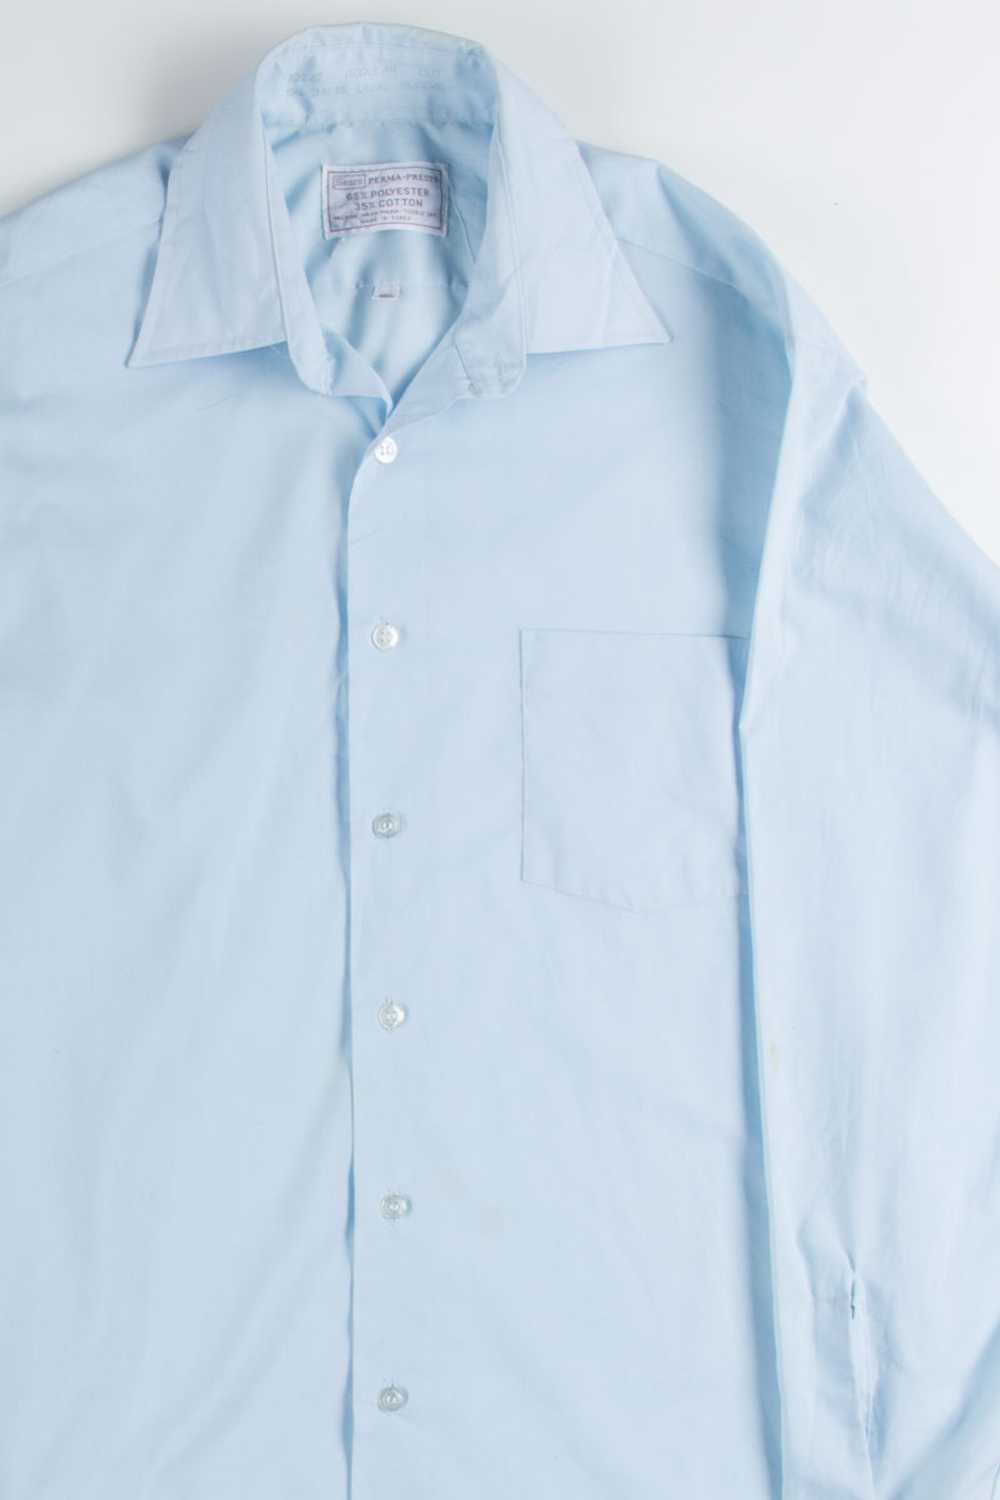 Vintage Light Blue Button Up Shirt - image 5